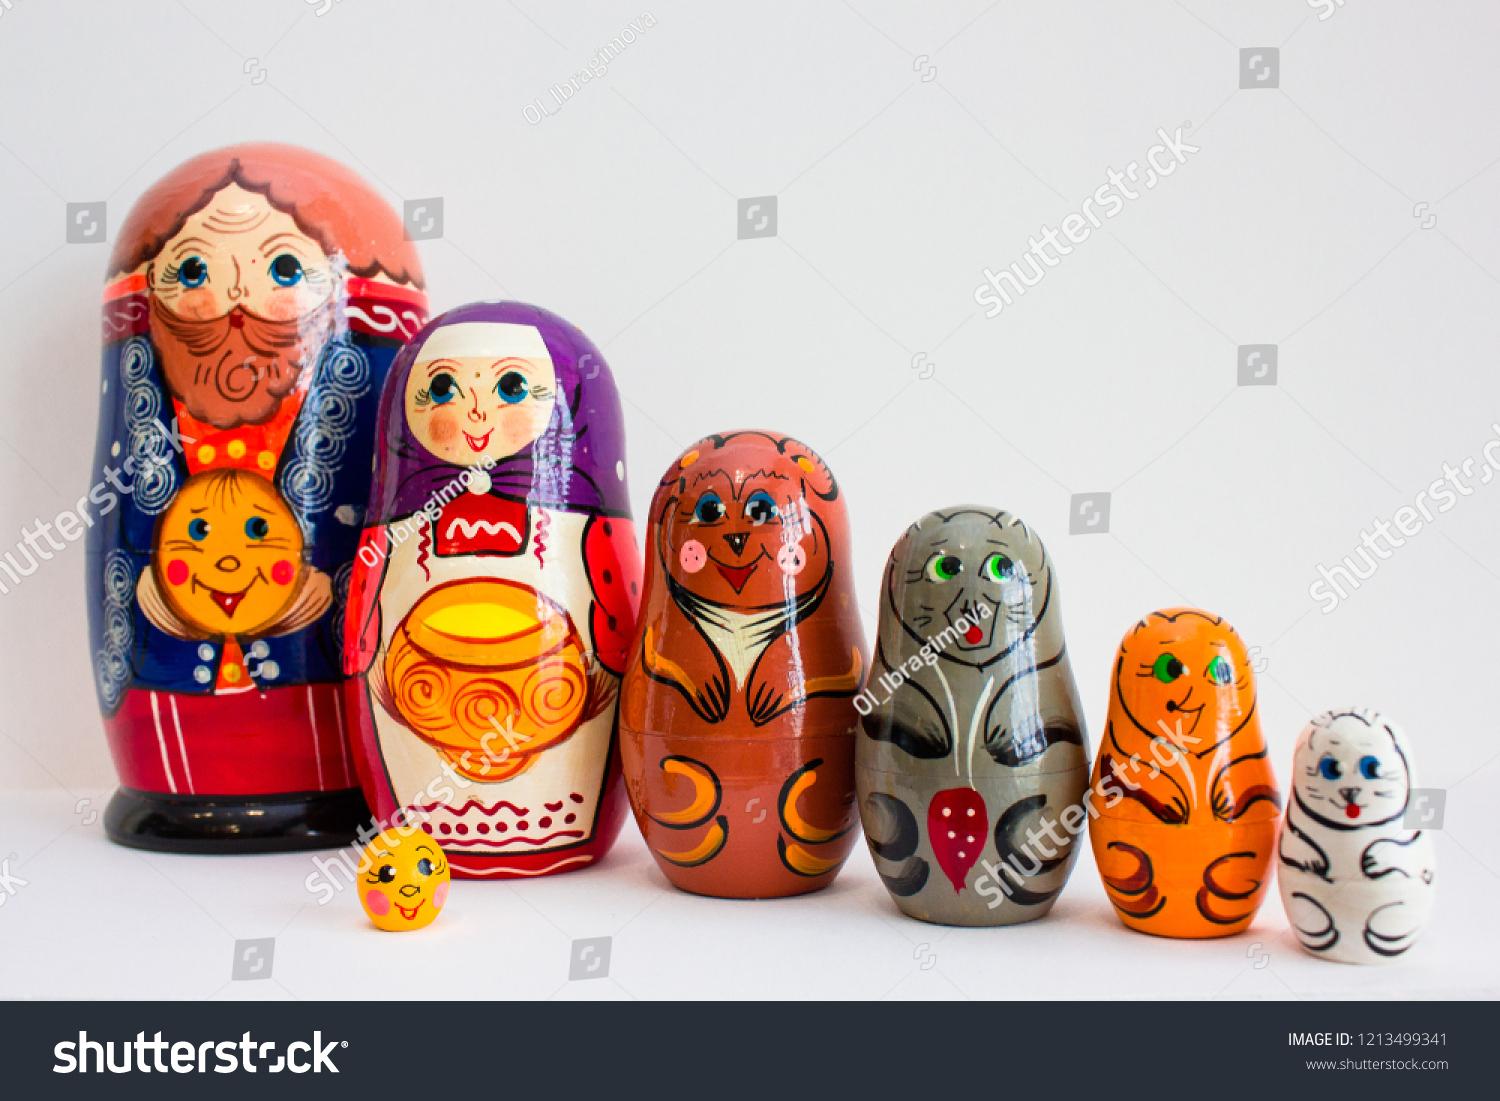 children's russian dolls